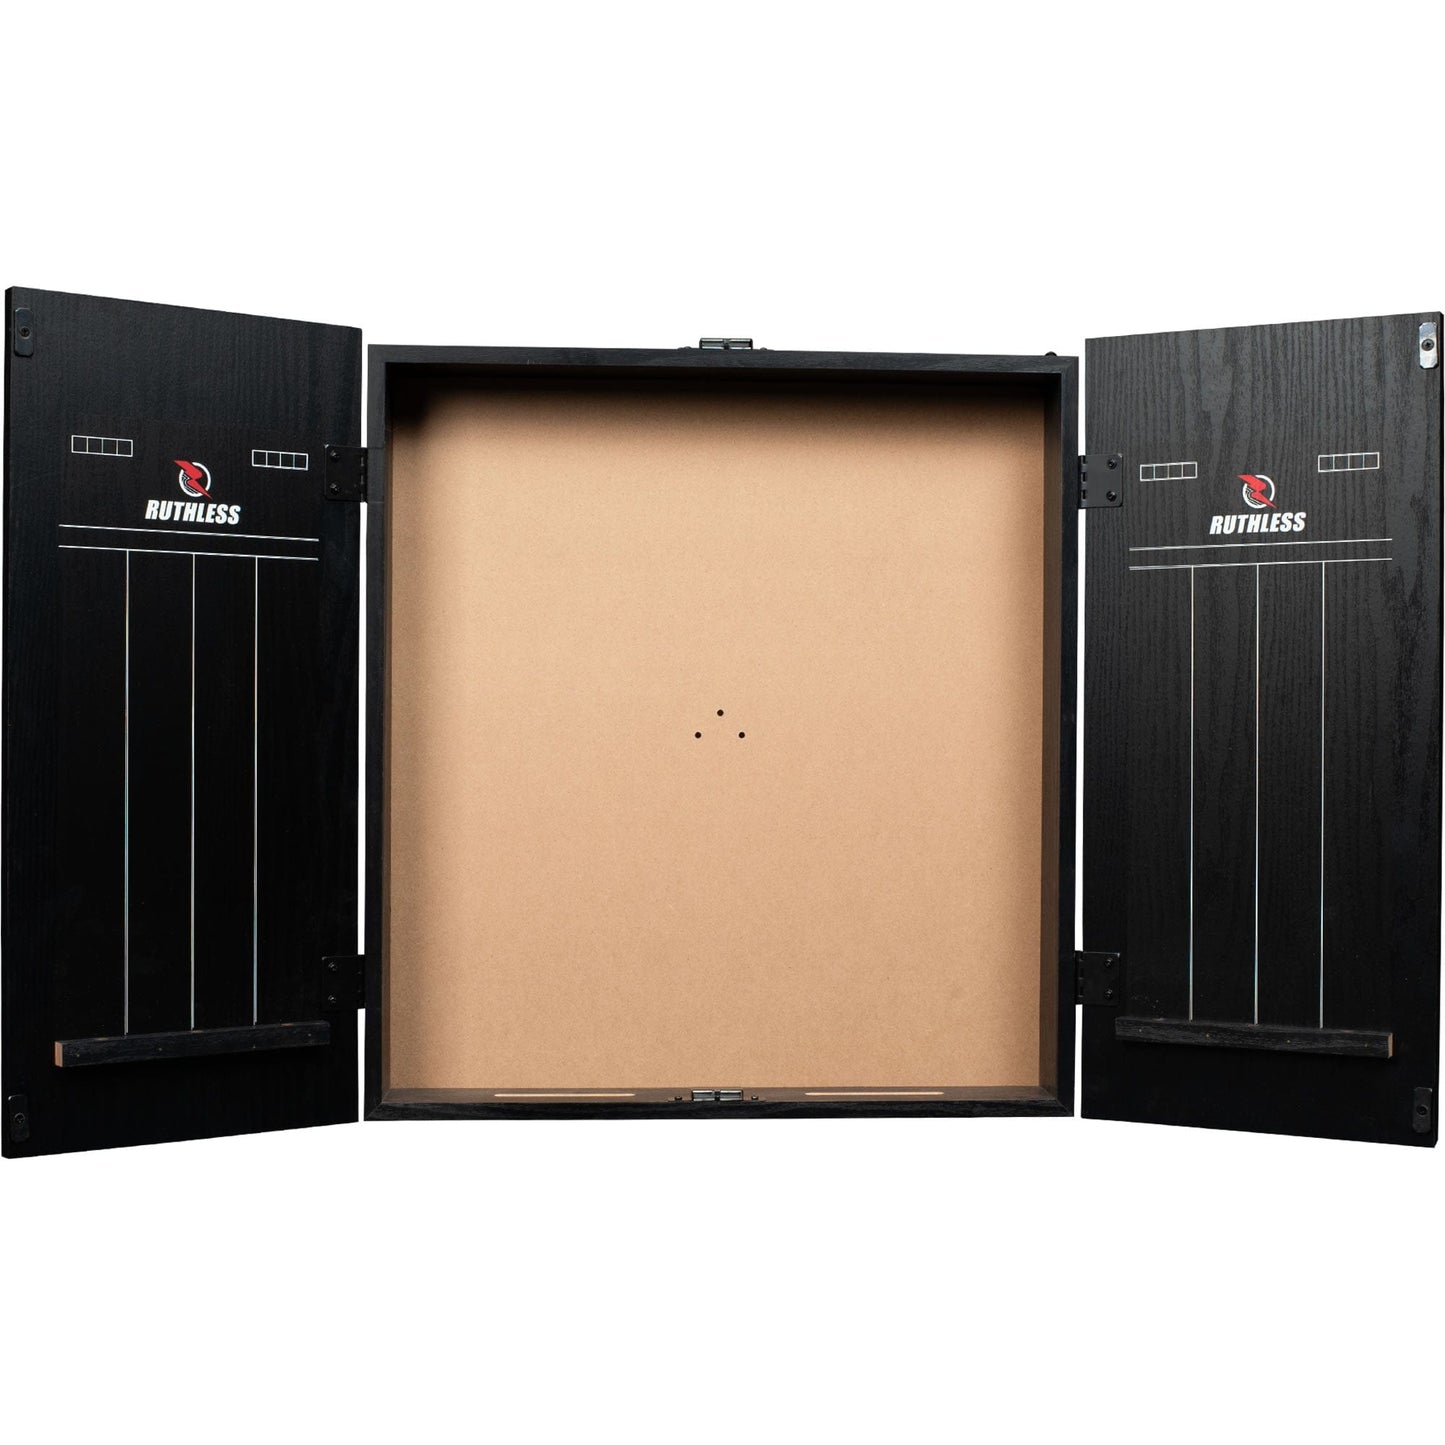 Ruthless Dartboard Cabinet - Square Design - Black